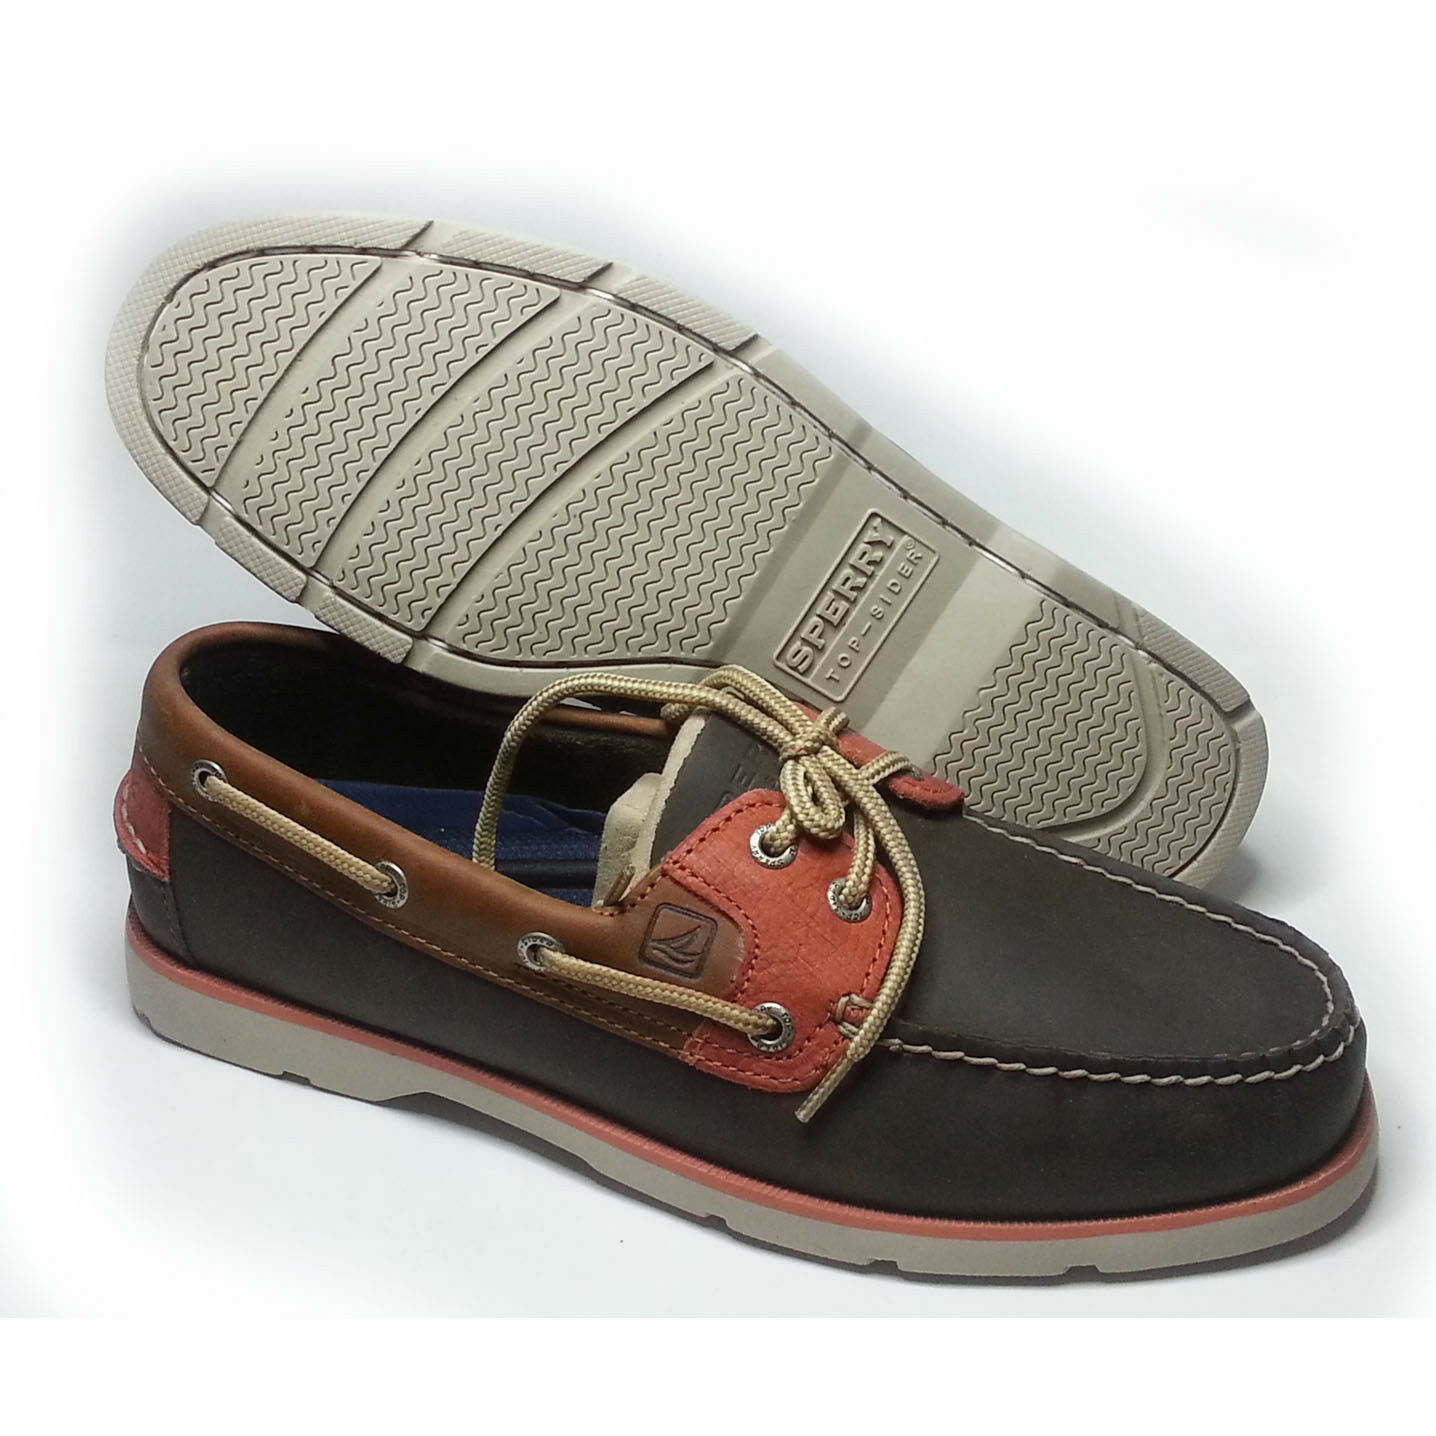 Primary image for Sperry Top-Sider Men Size 8.5 Boat Shoes LEEWARD DK Brown/Tan/Orange NIB